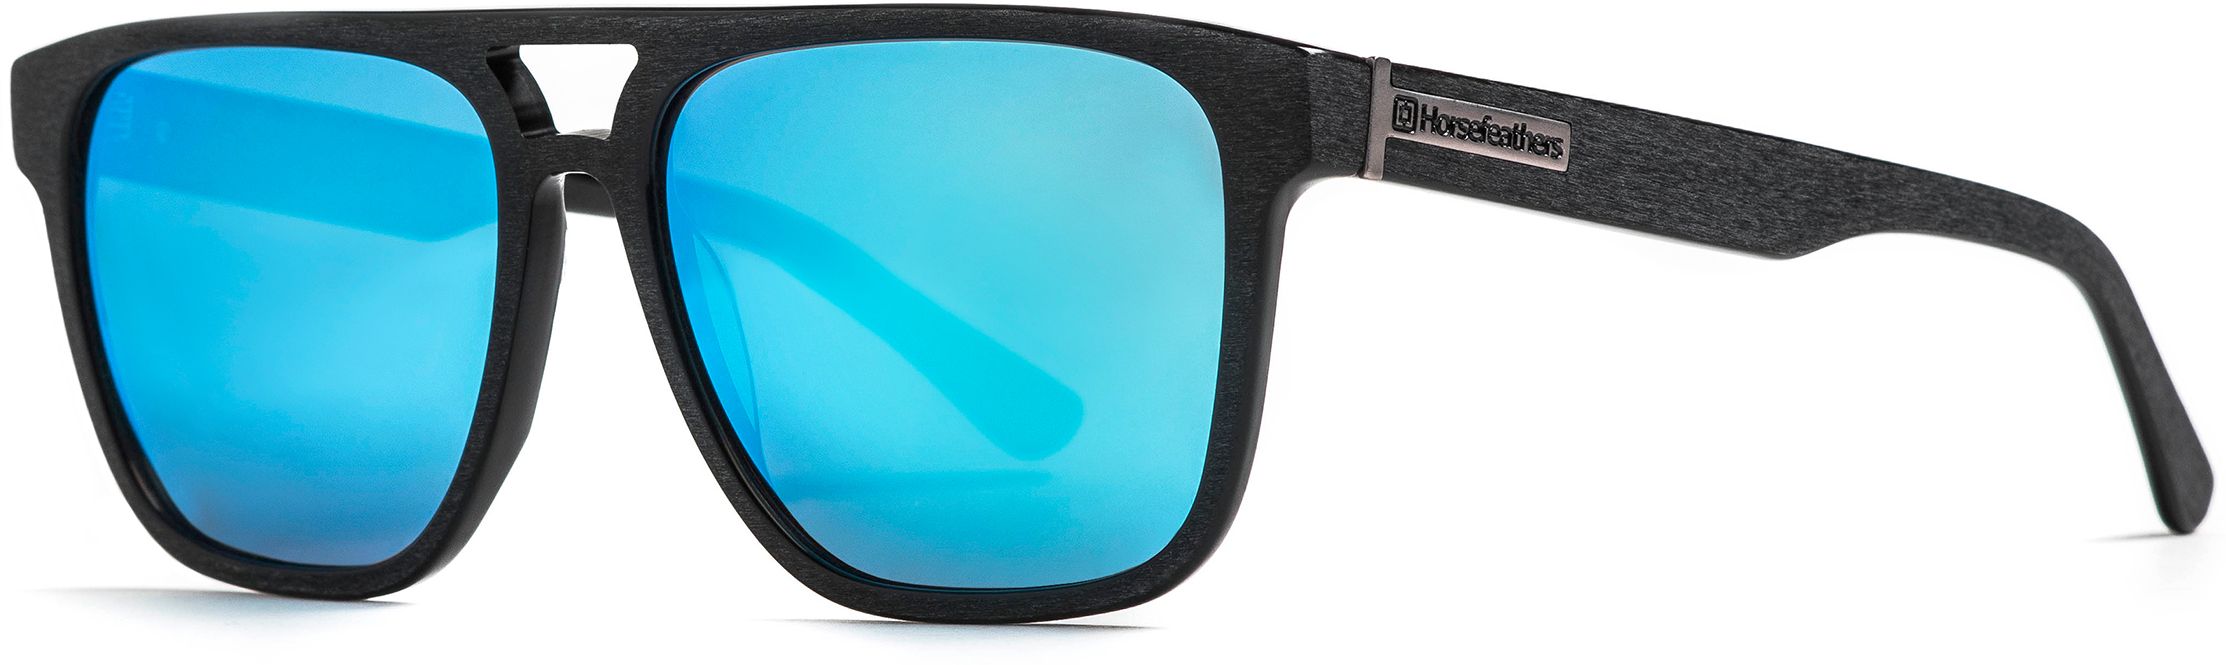 sluneční brýle HORSEFEATHERS TRIGGER SUNGLASSES Brushehd Black/Mirror Blue